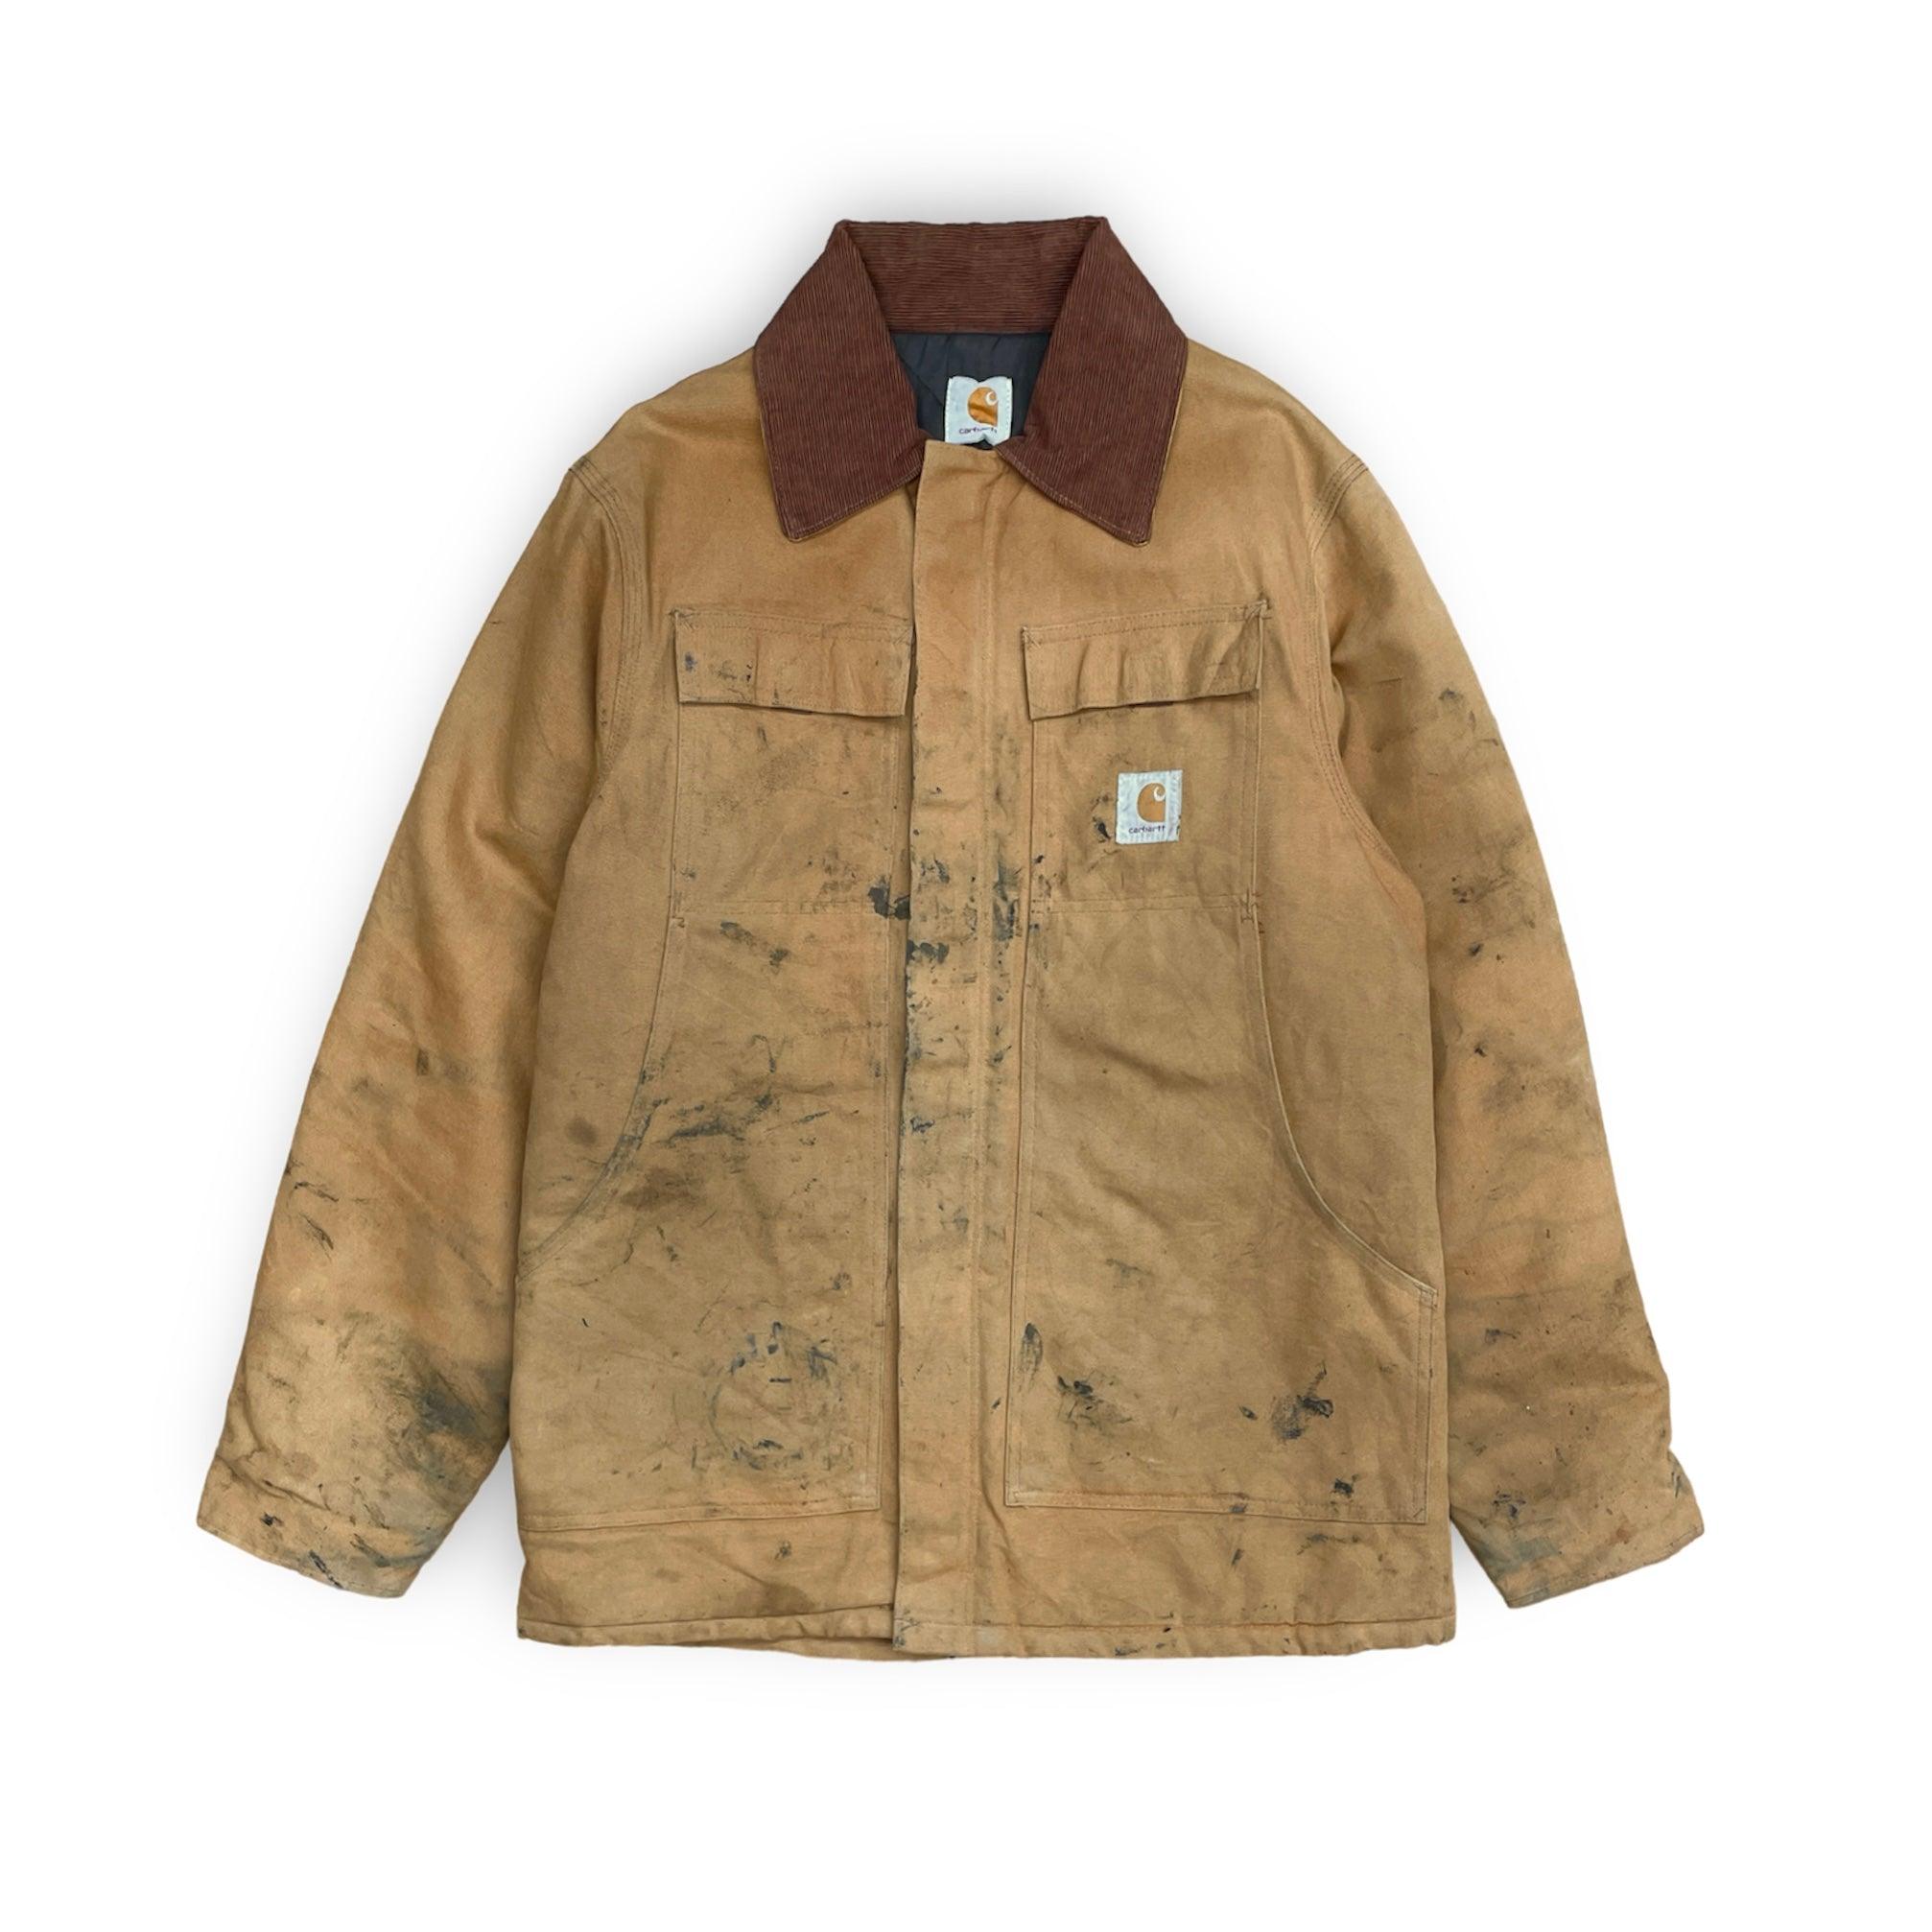 90s carhartt jacket detroit jacket carhartt work jacket – no pain 